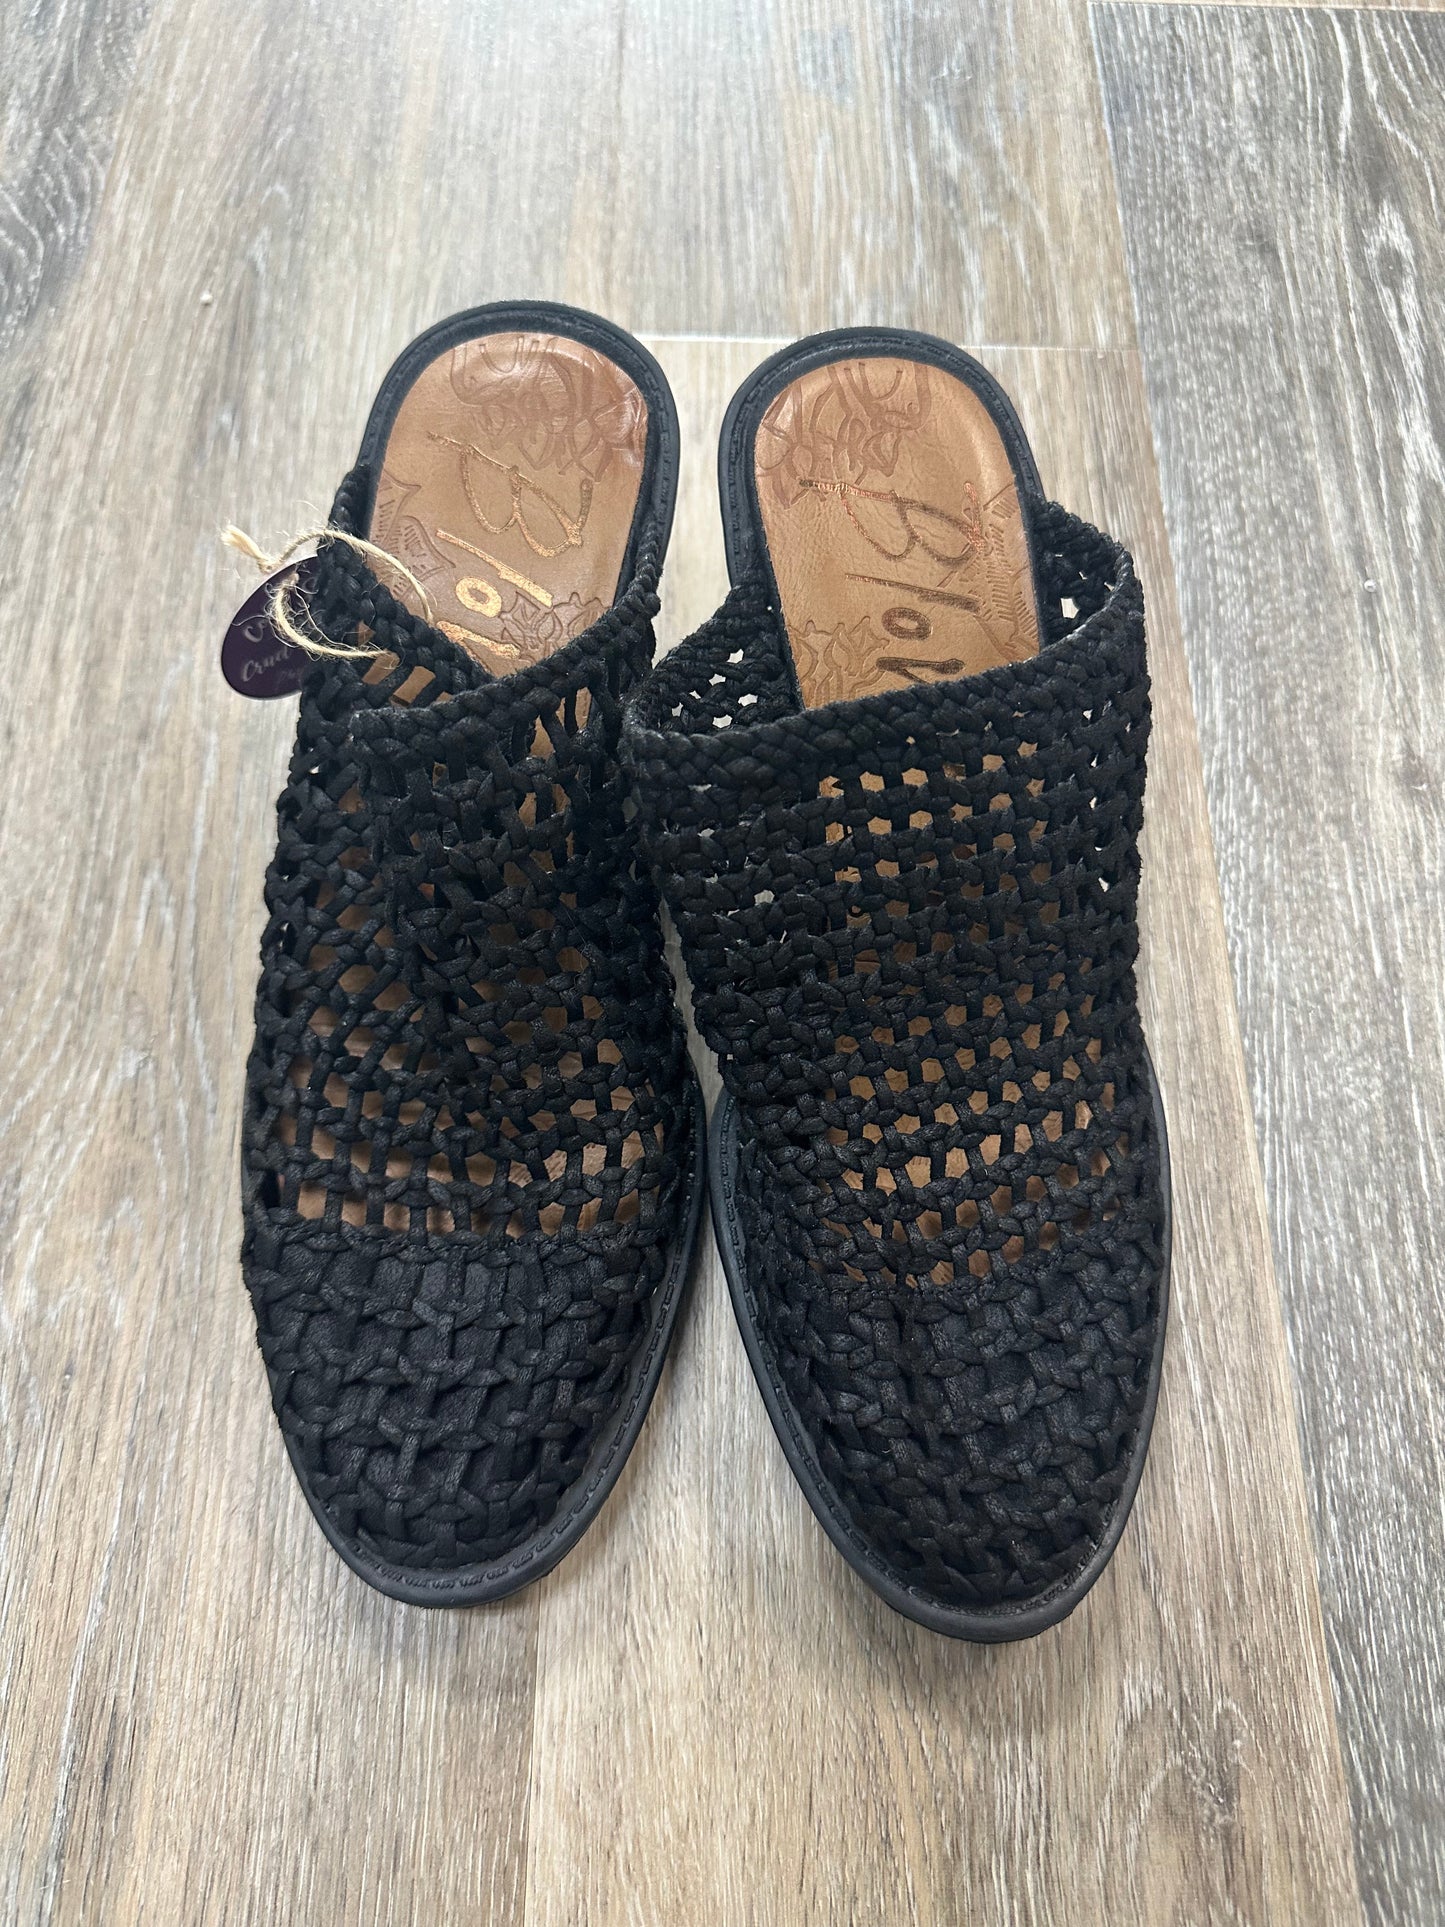 Black Shoes Heels Block Blowfish, Size 8